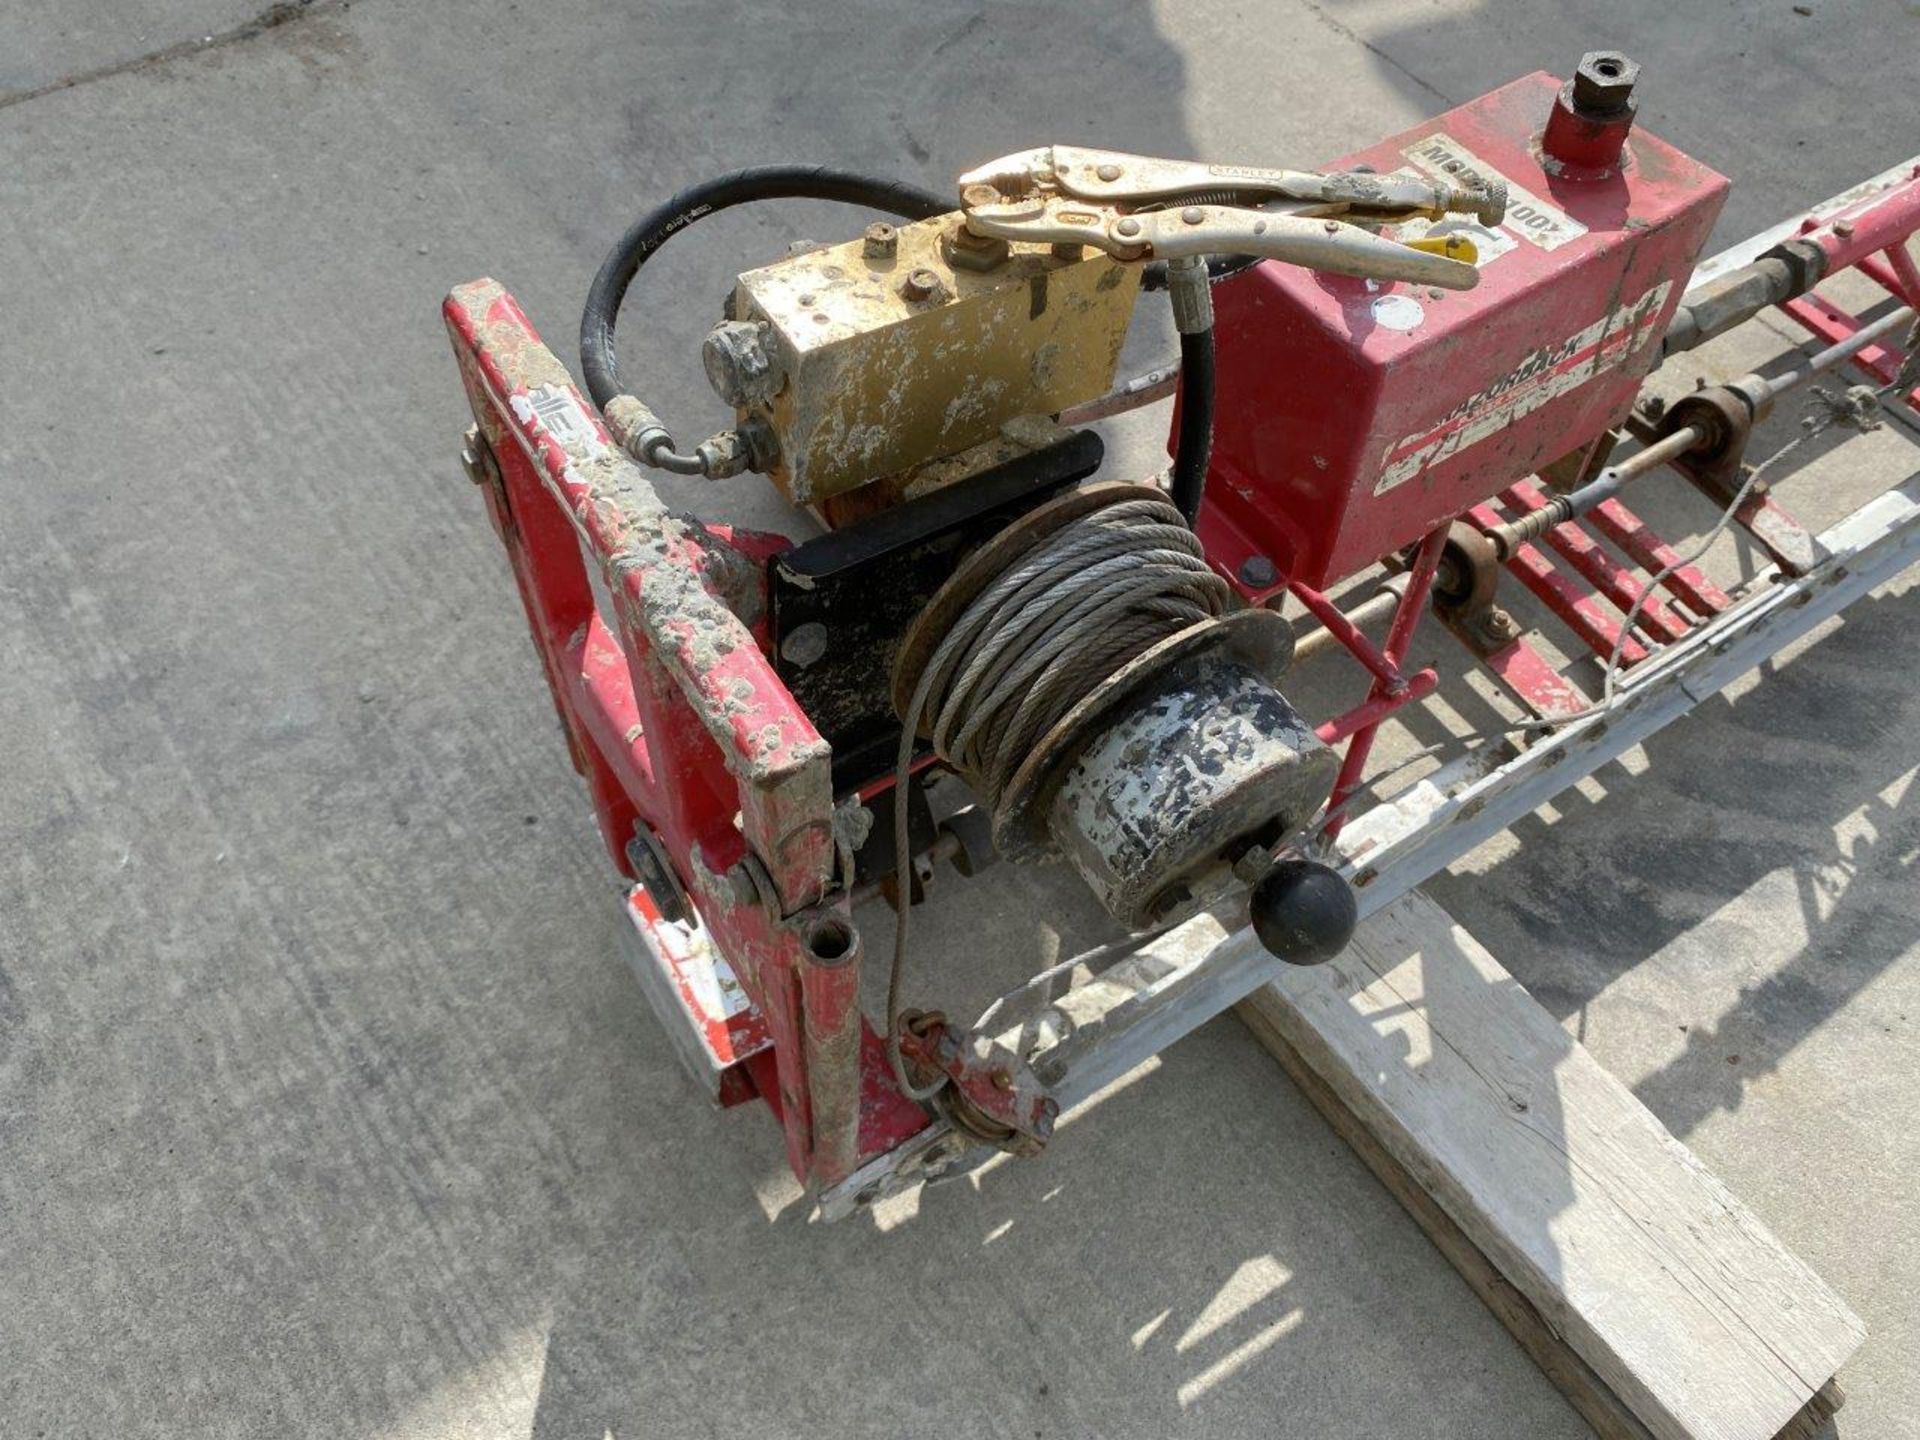 Allen Razorback screed, 24' width, Honda gas power engine, manual start, hydraulic winches, operates - Image 7 of 15